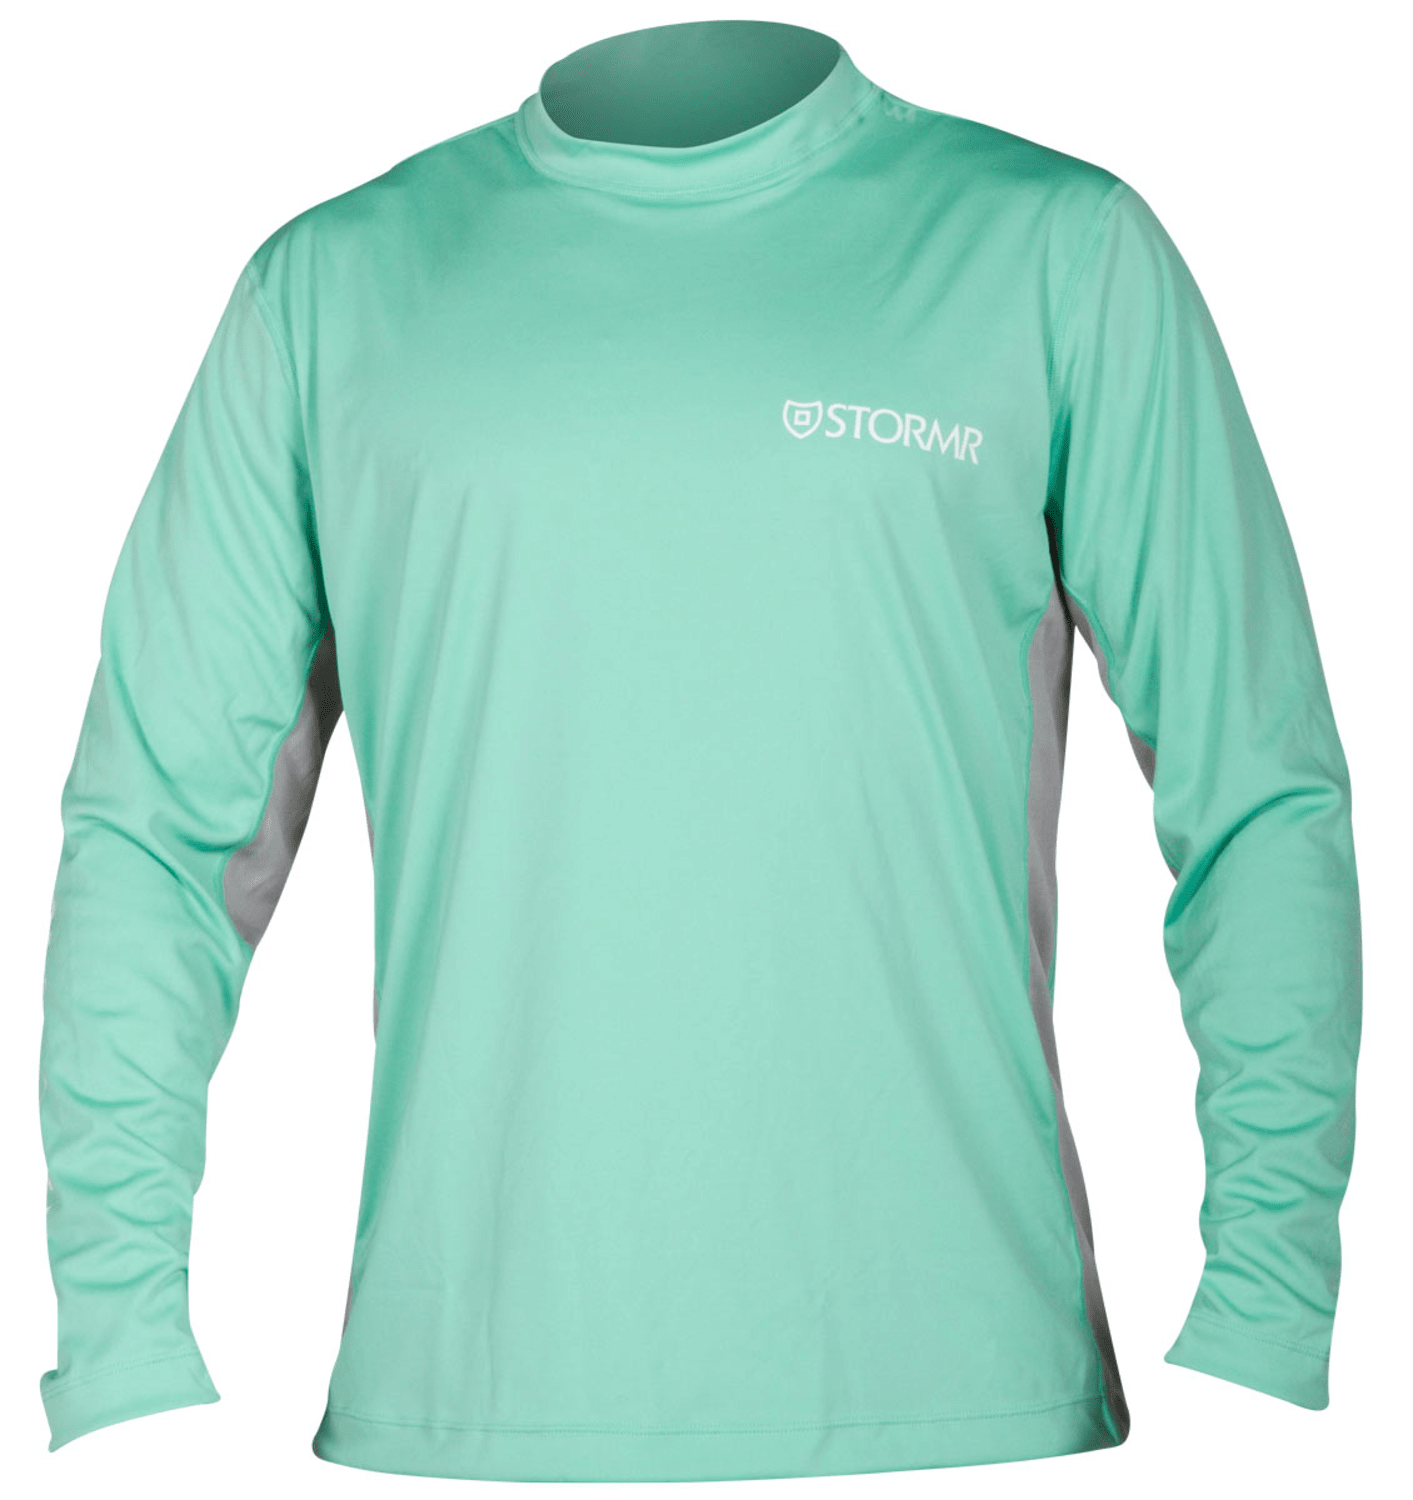 StormR UV Mesh Side Longsleeve Men's Performance Shirt, Gray, Medium